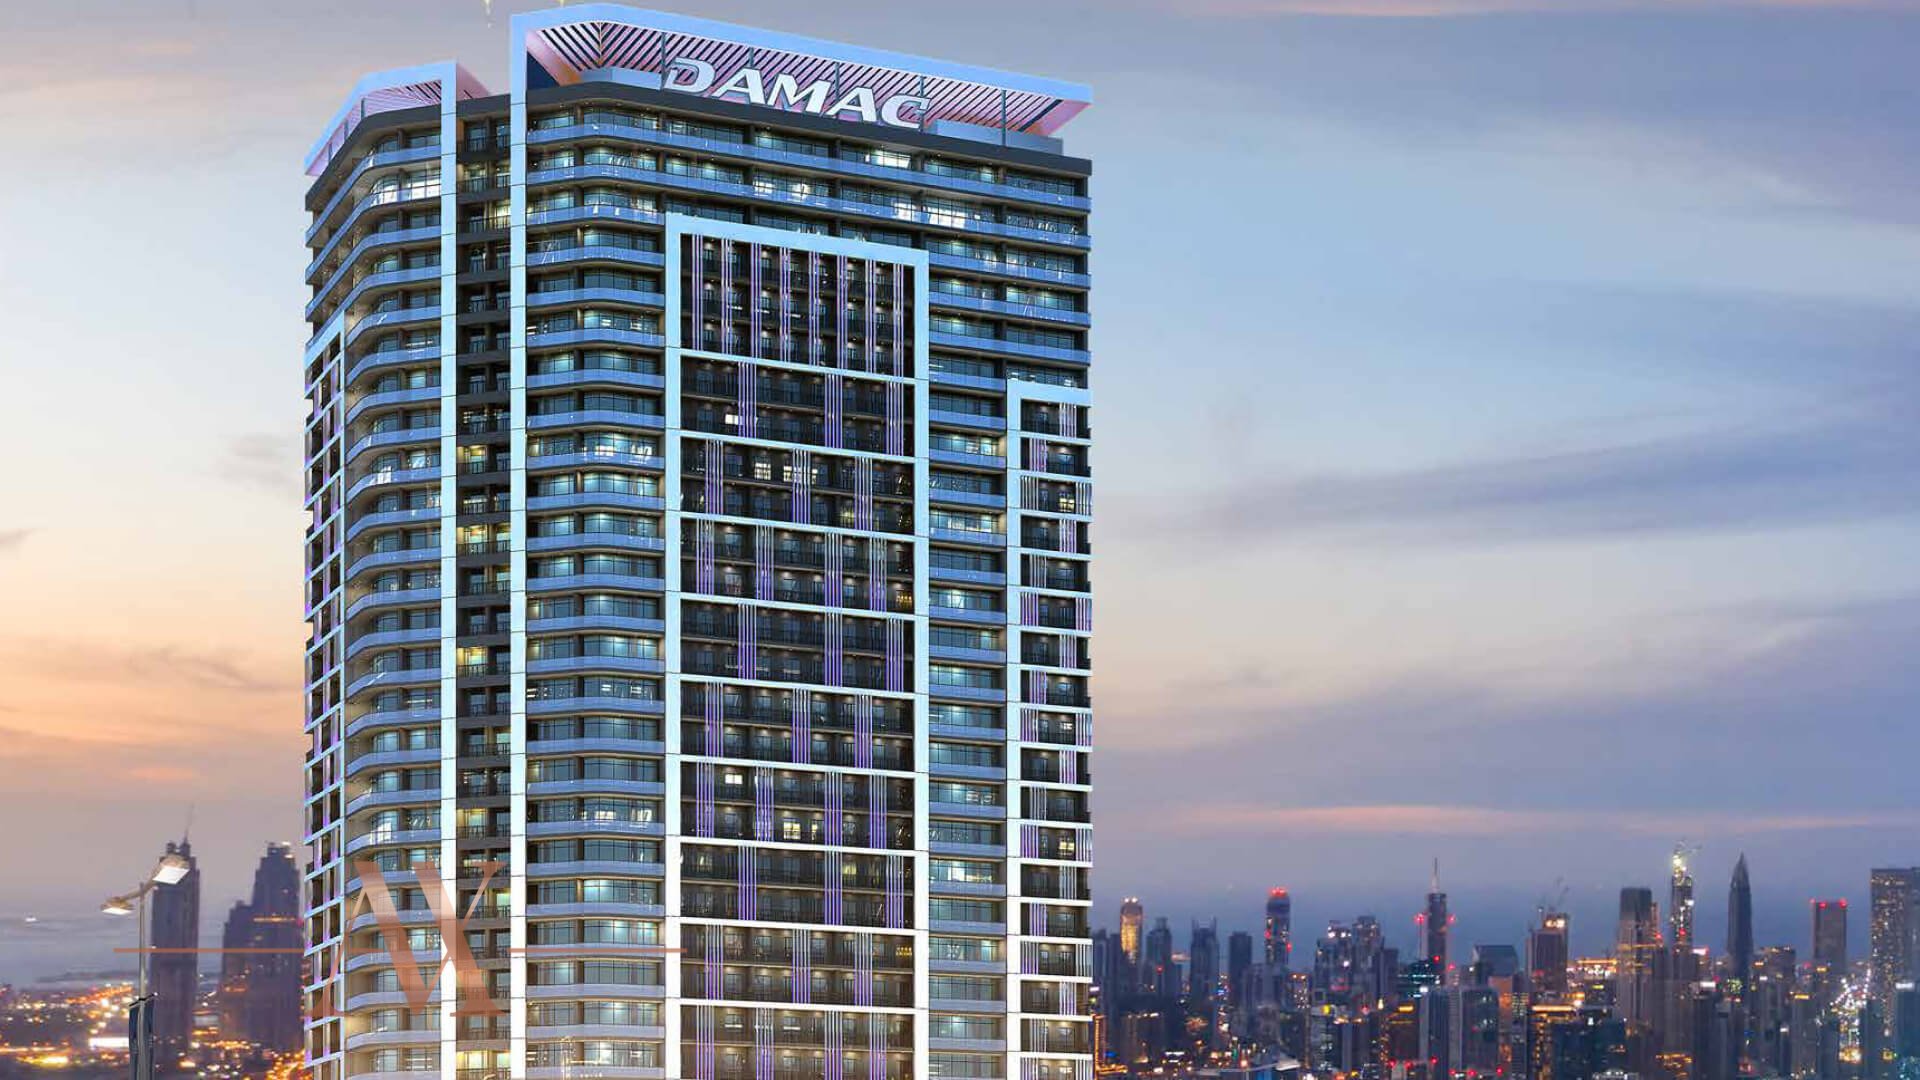 ZADA TOWER by Damac Properties in Business Bay, Dubai, UAE